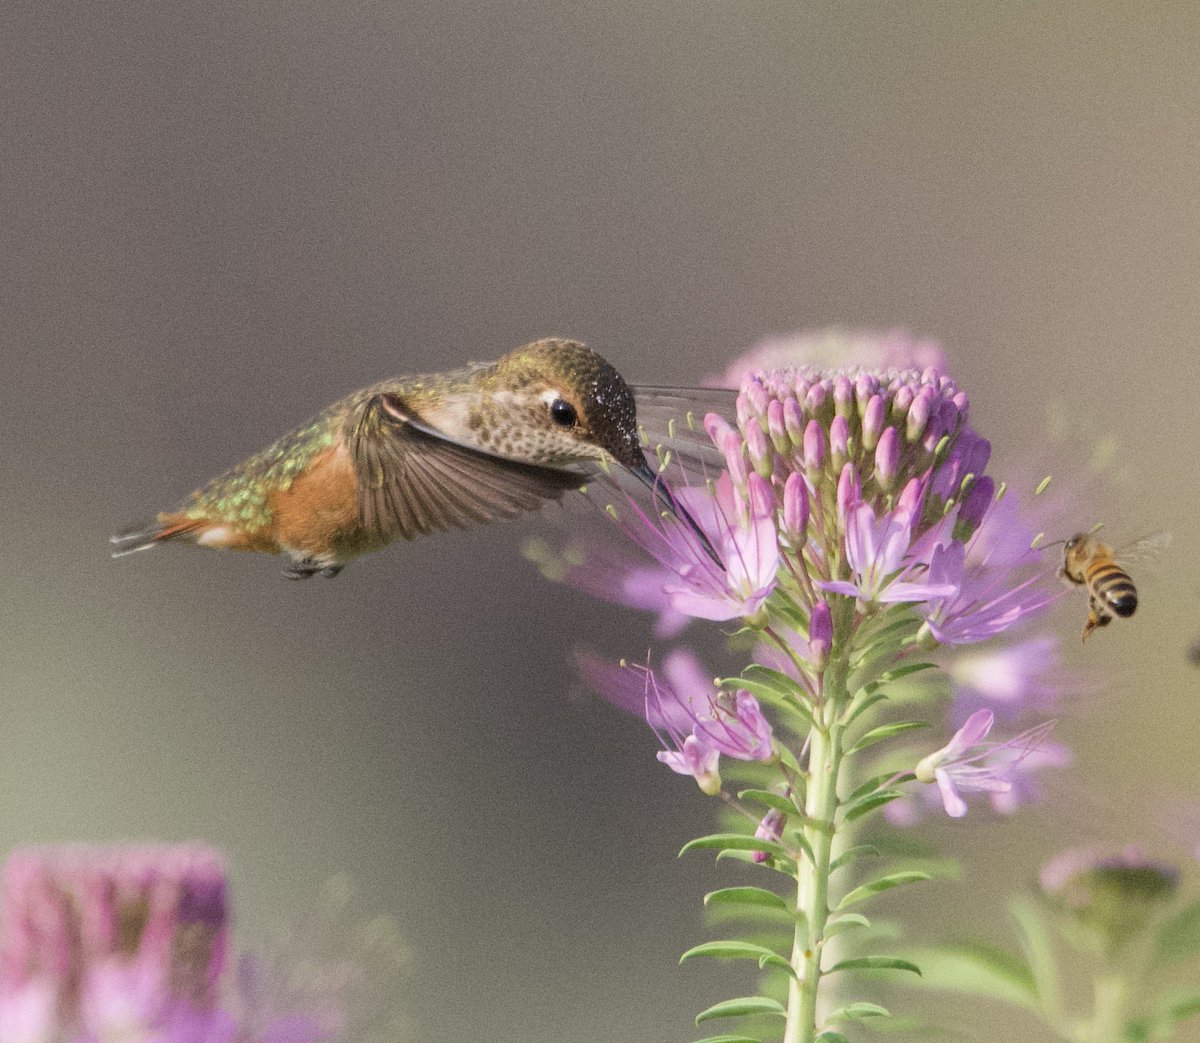 Some of my old Hummingbird photos. 

Nikon D500
Sigma 150-600mm 
Jesse Watkins Photography 

#hummingbird #hummingbirds #hummingbirdphotography #birds #birdphotography #birdphotographer #birding #nikond500 #nikonusa #summer #summerphotography #sigma150600